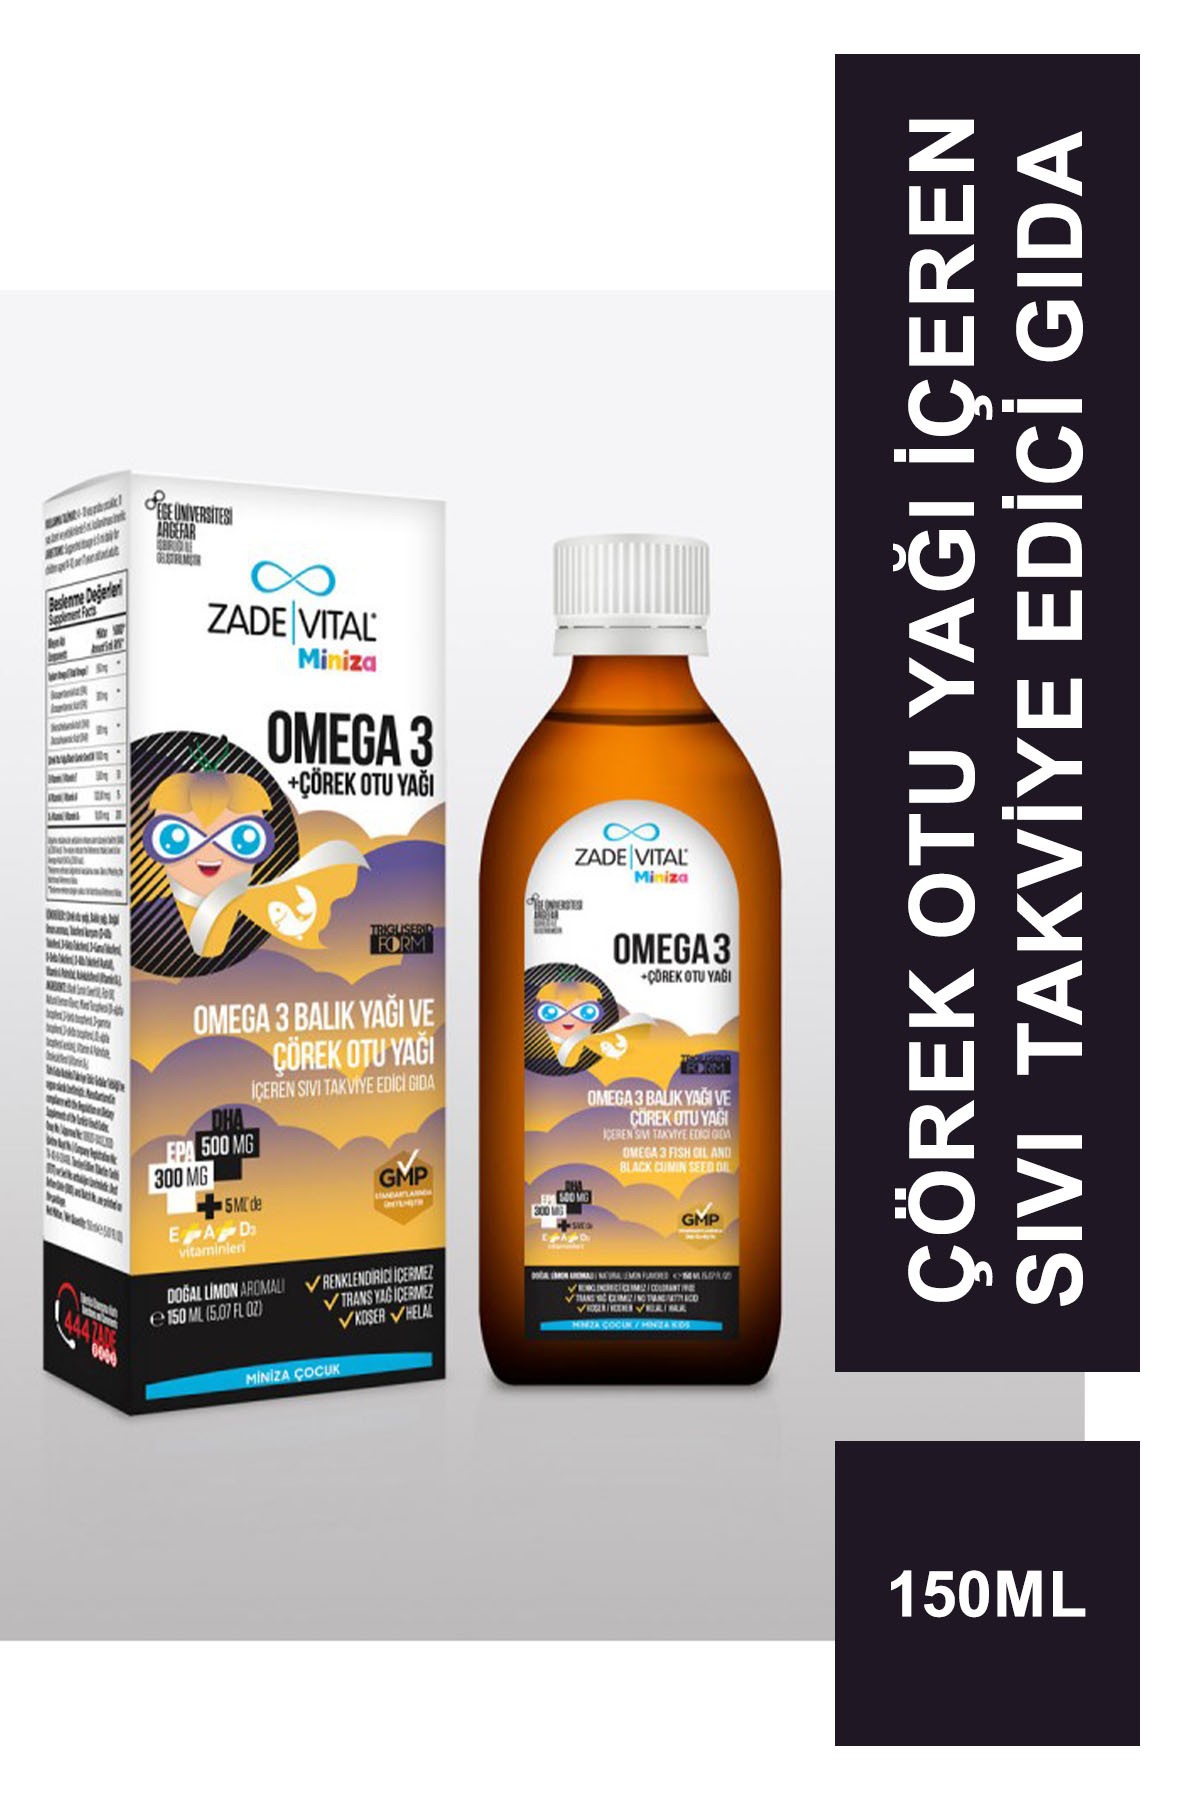 Outlet - Zade Vital Miniza Omega 3 + Çörek Otu Yağı 150 ml (S.K.T 06-2023)